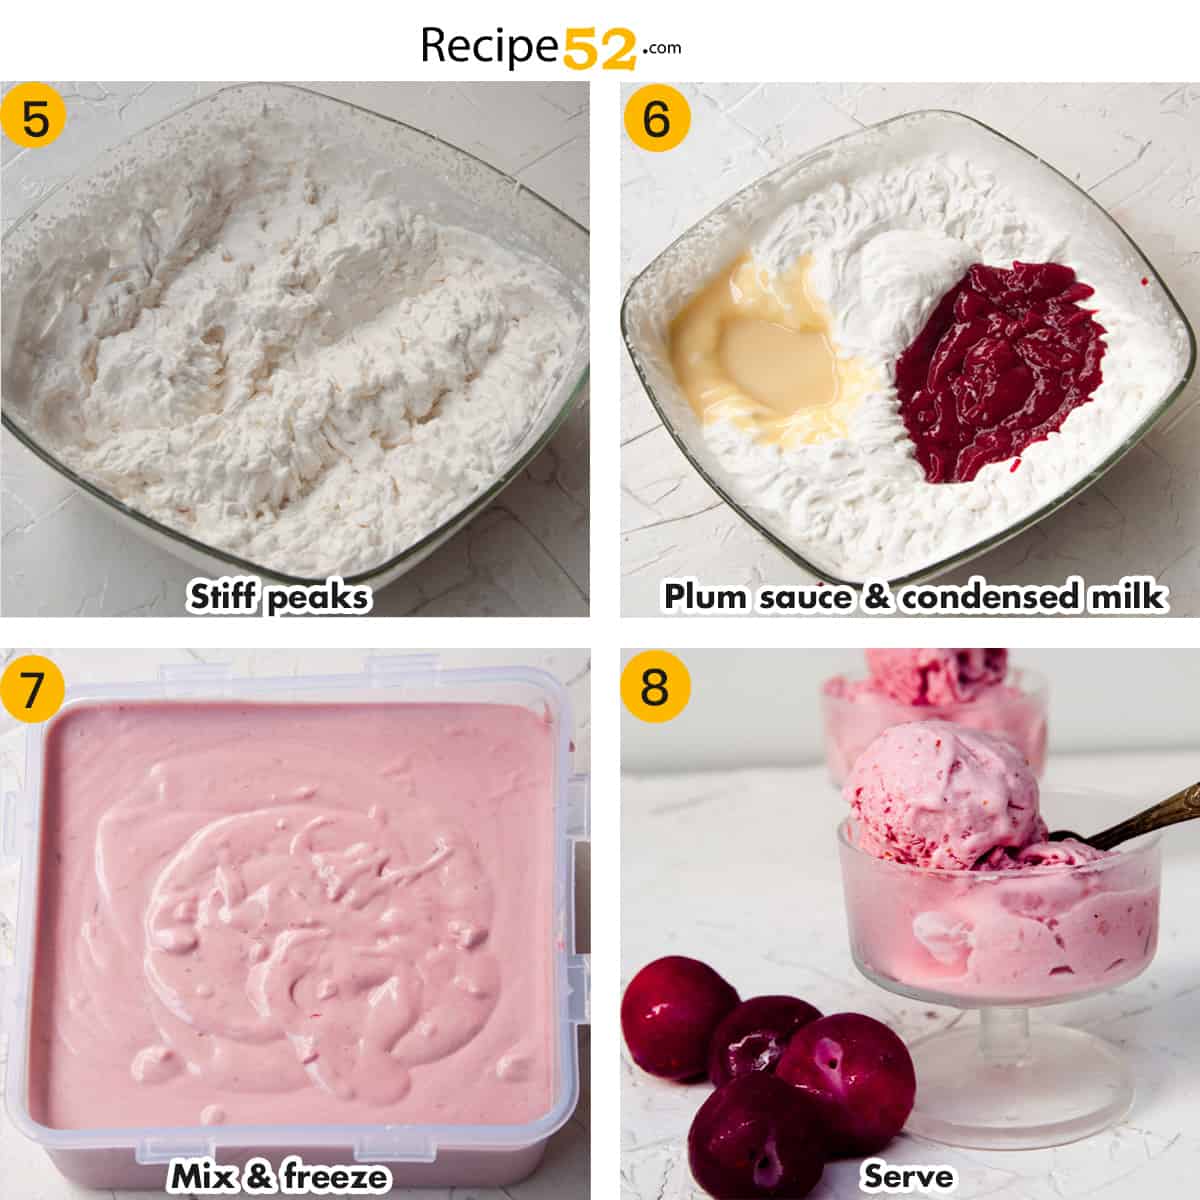 Steps to make plum ice cream.